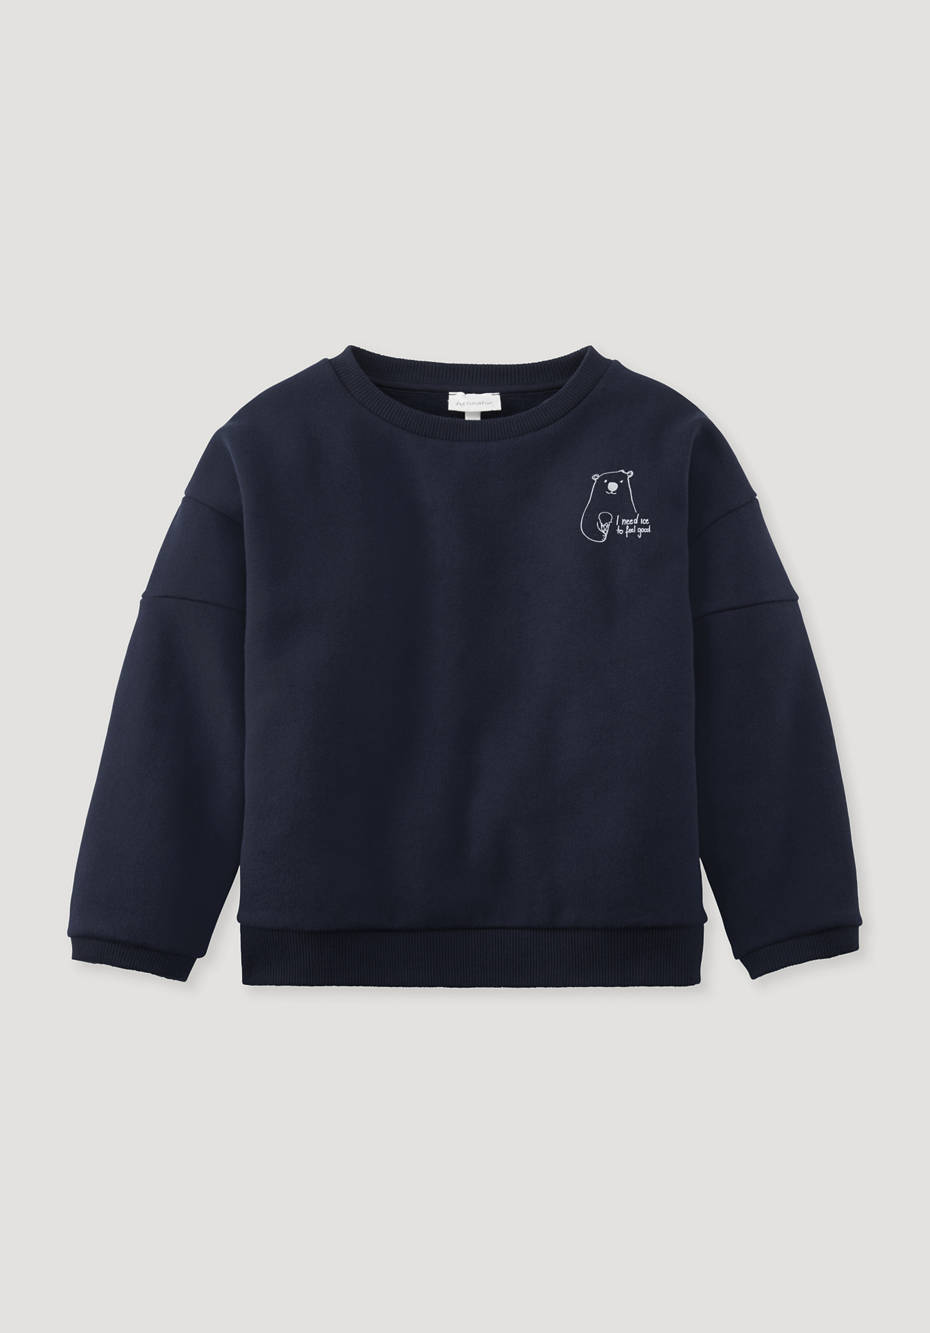 Pure organic cotton sweatshirt